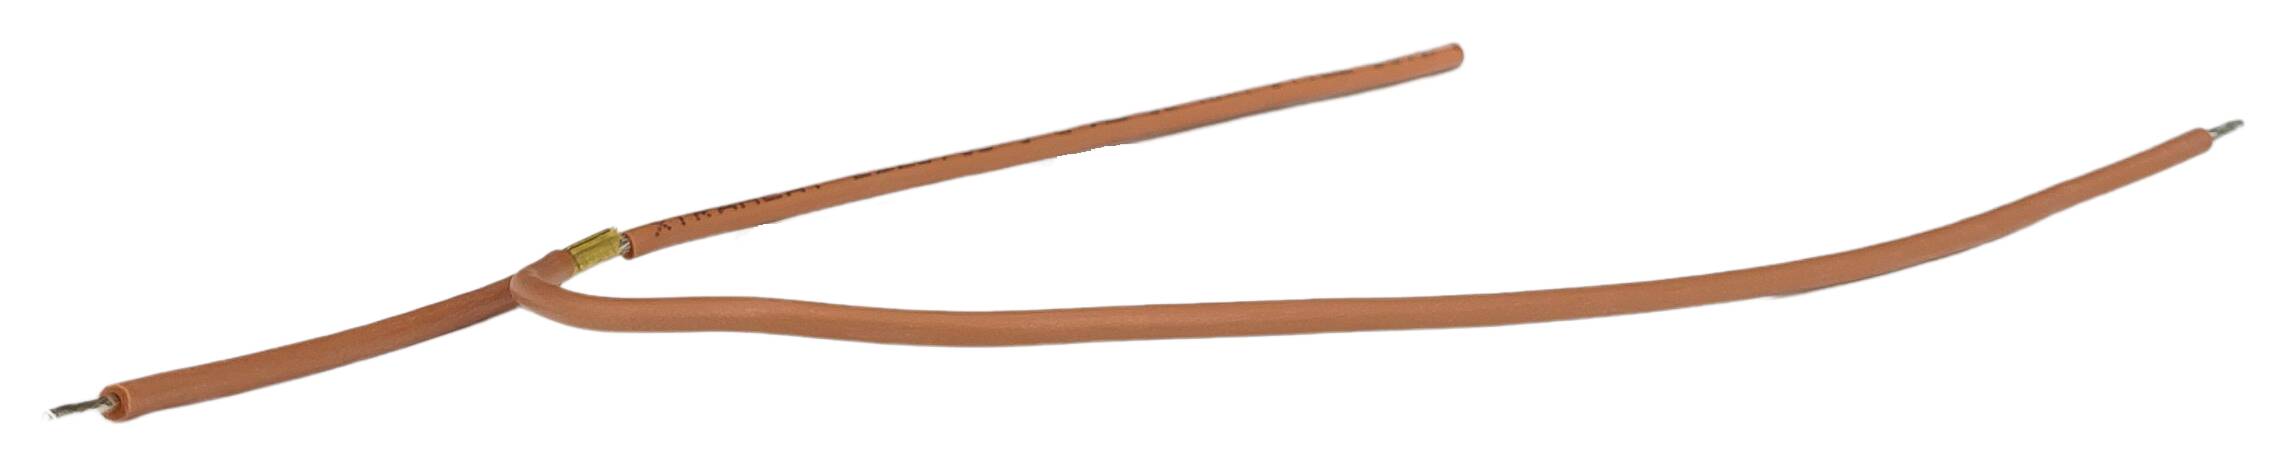 Kabel-Y-Verteiler 1x0,75 SIF 110/60/260 mm, AEH-Y-Crimpung braun